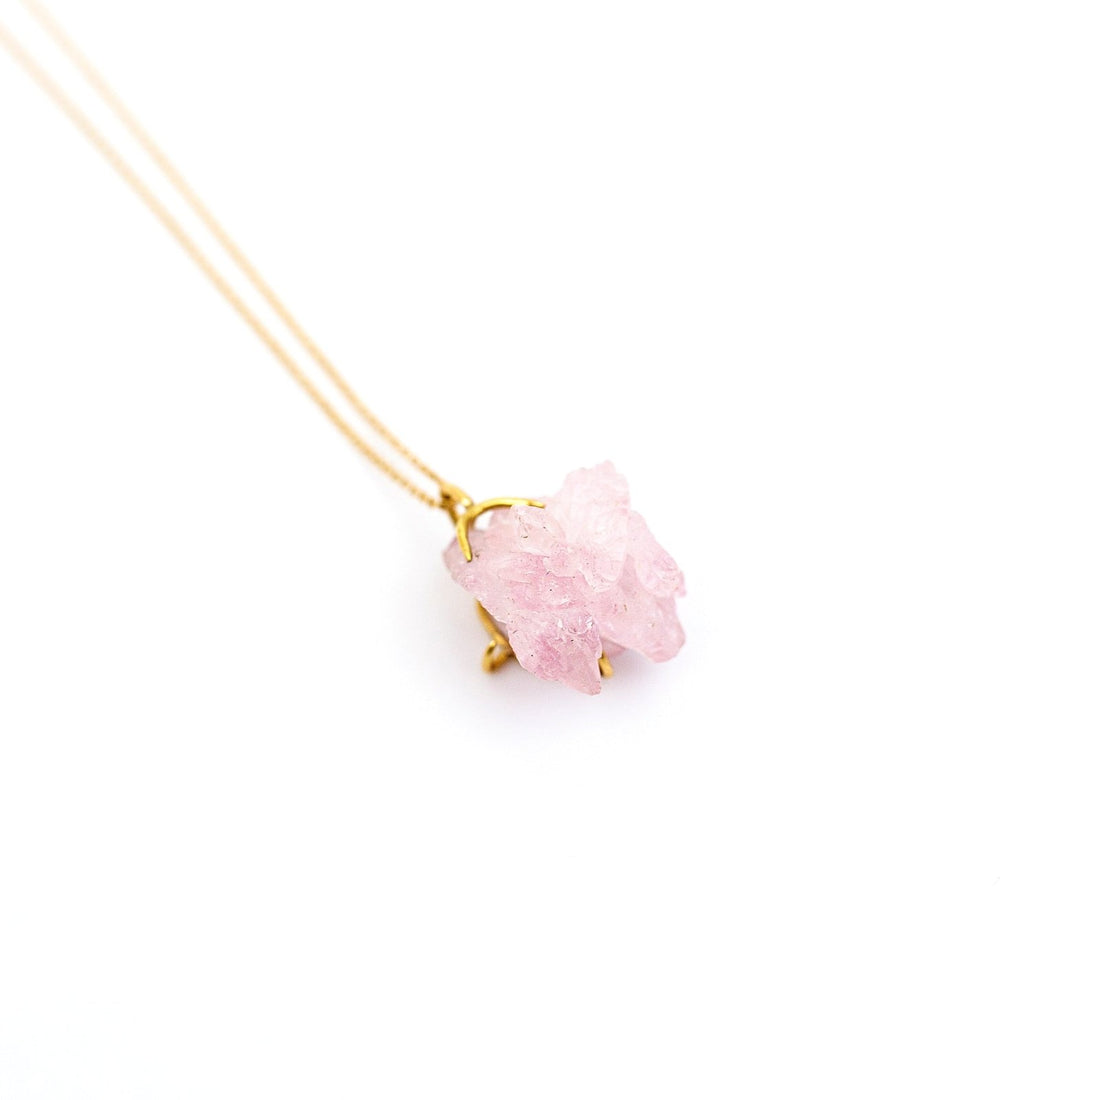 One of a Kind Raw Rose Quartz Necklace - Ele Keats Jewelry